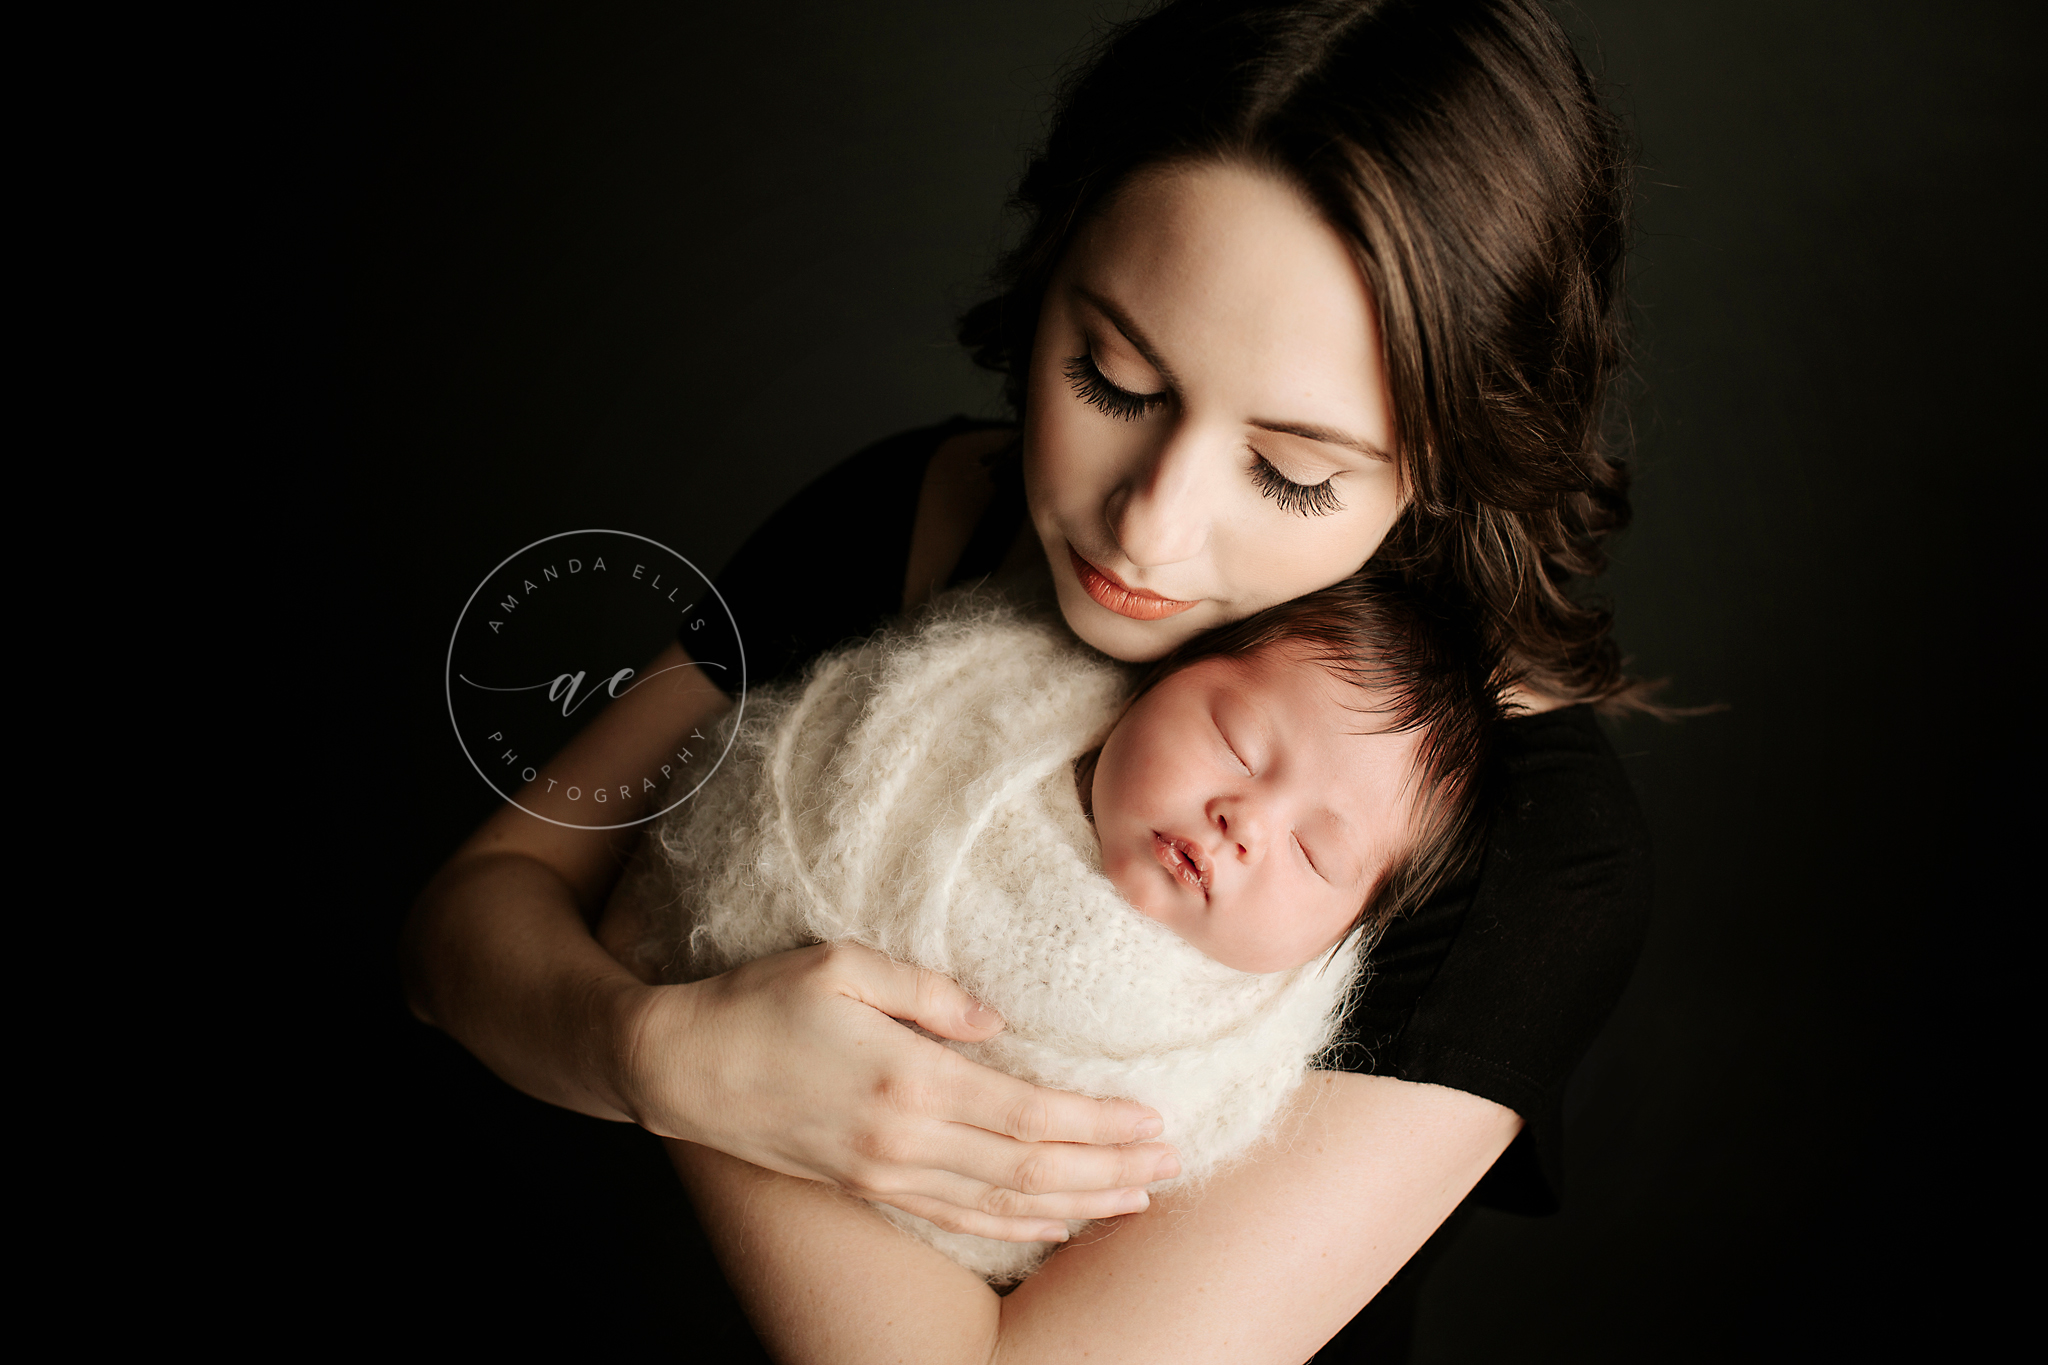 newborn baby Rose with her mom